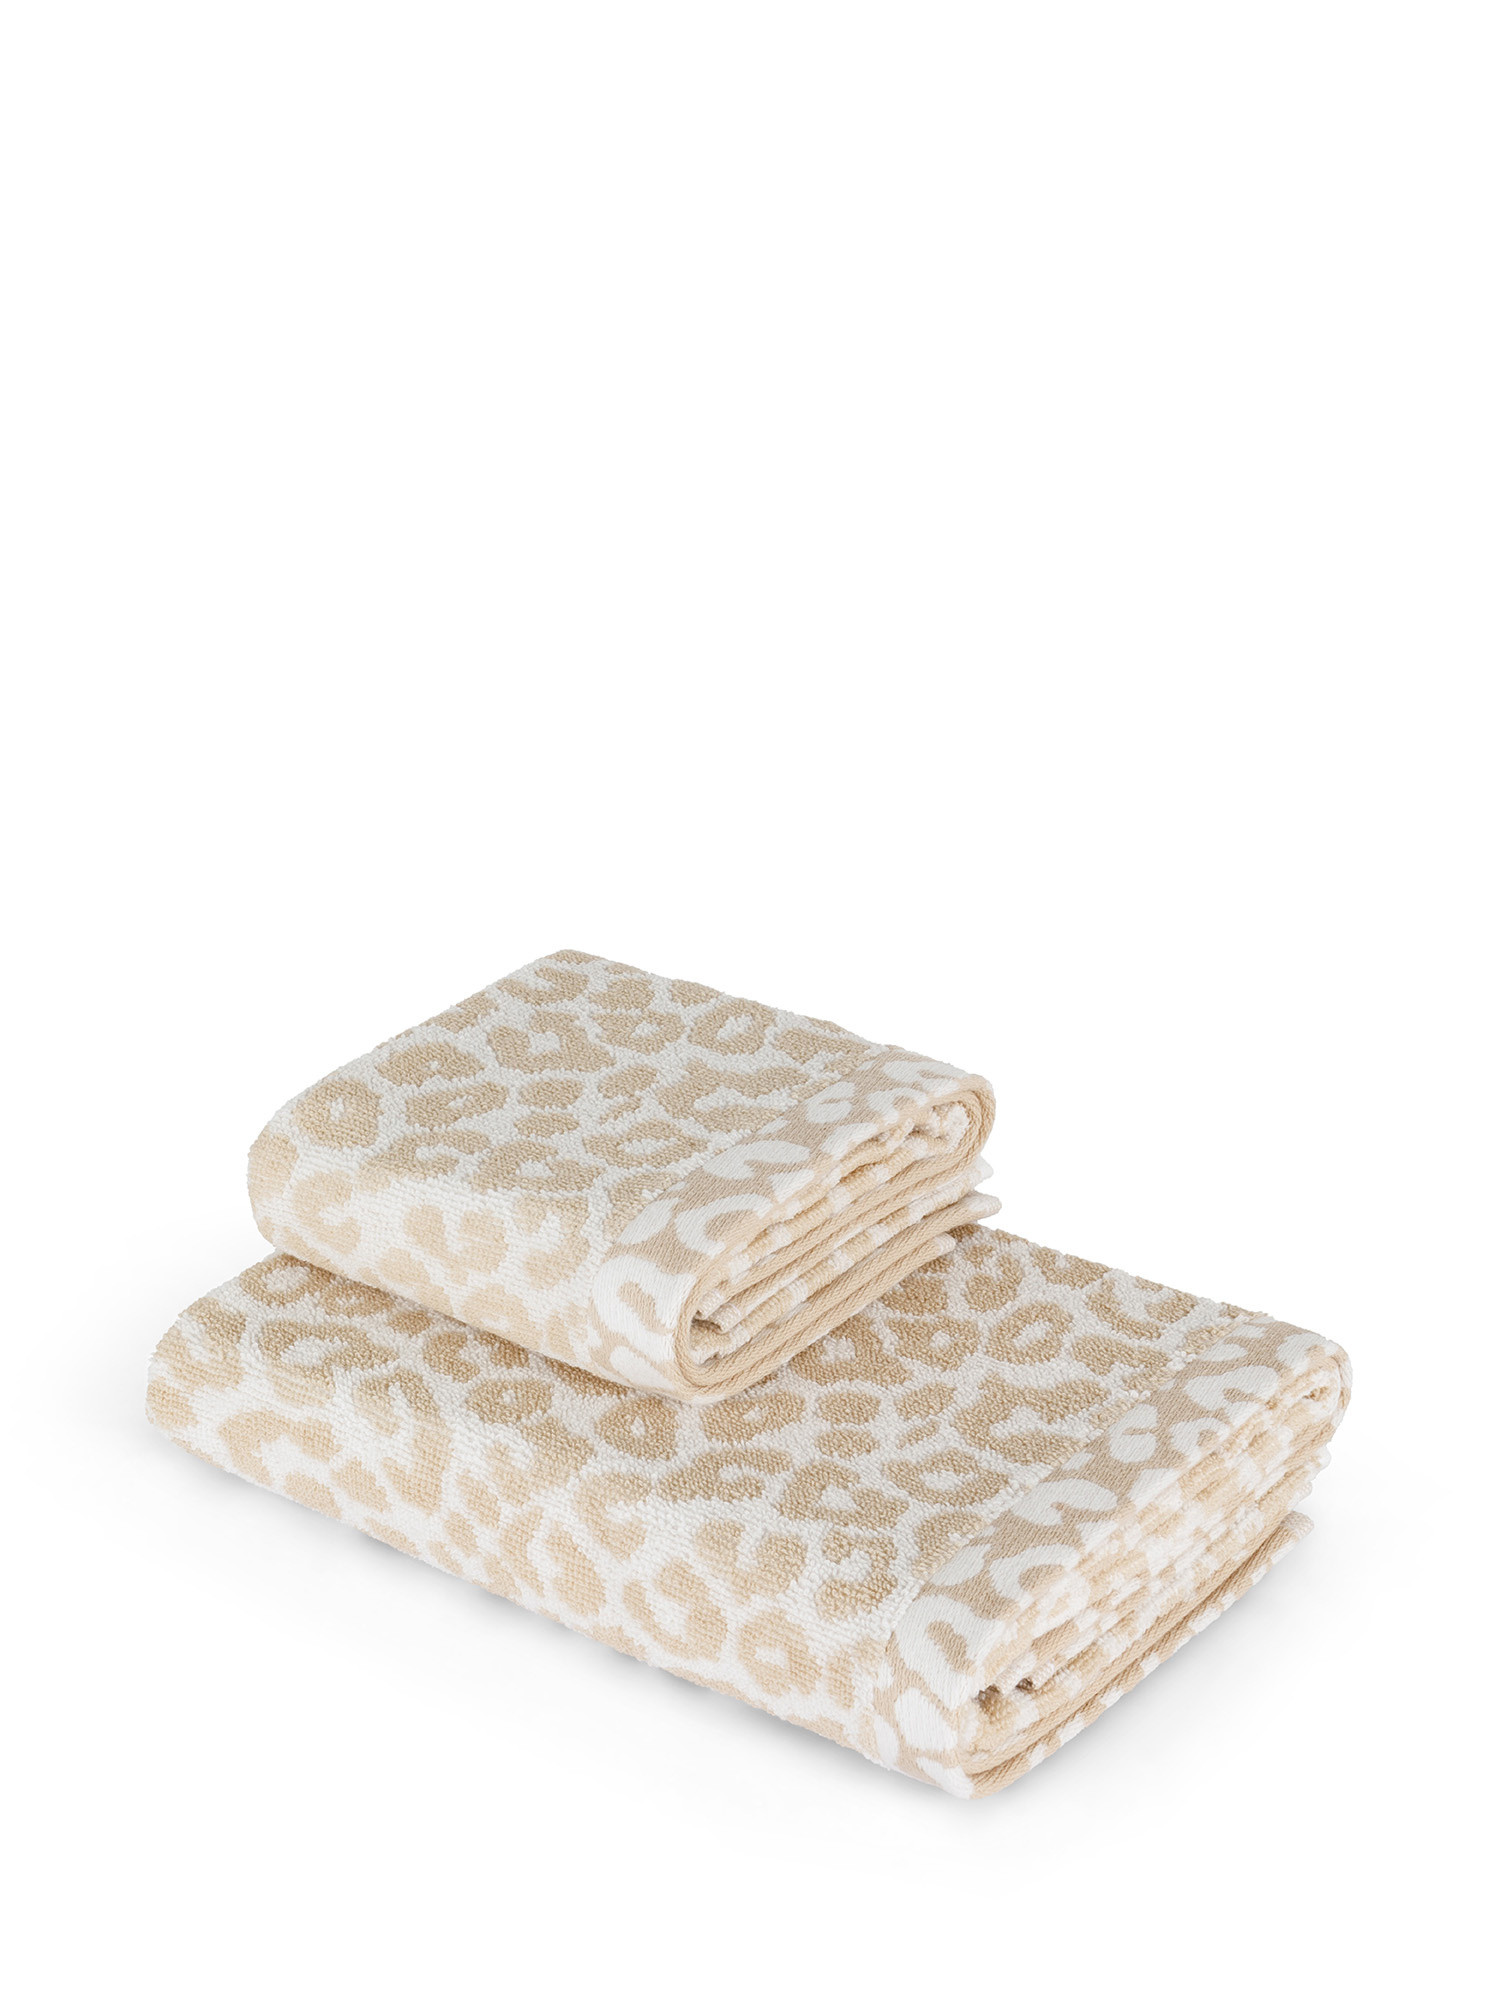 Animal print jacquard cotton terry towel, Cream, large image number 0